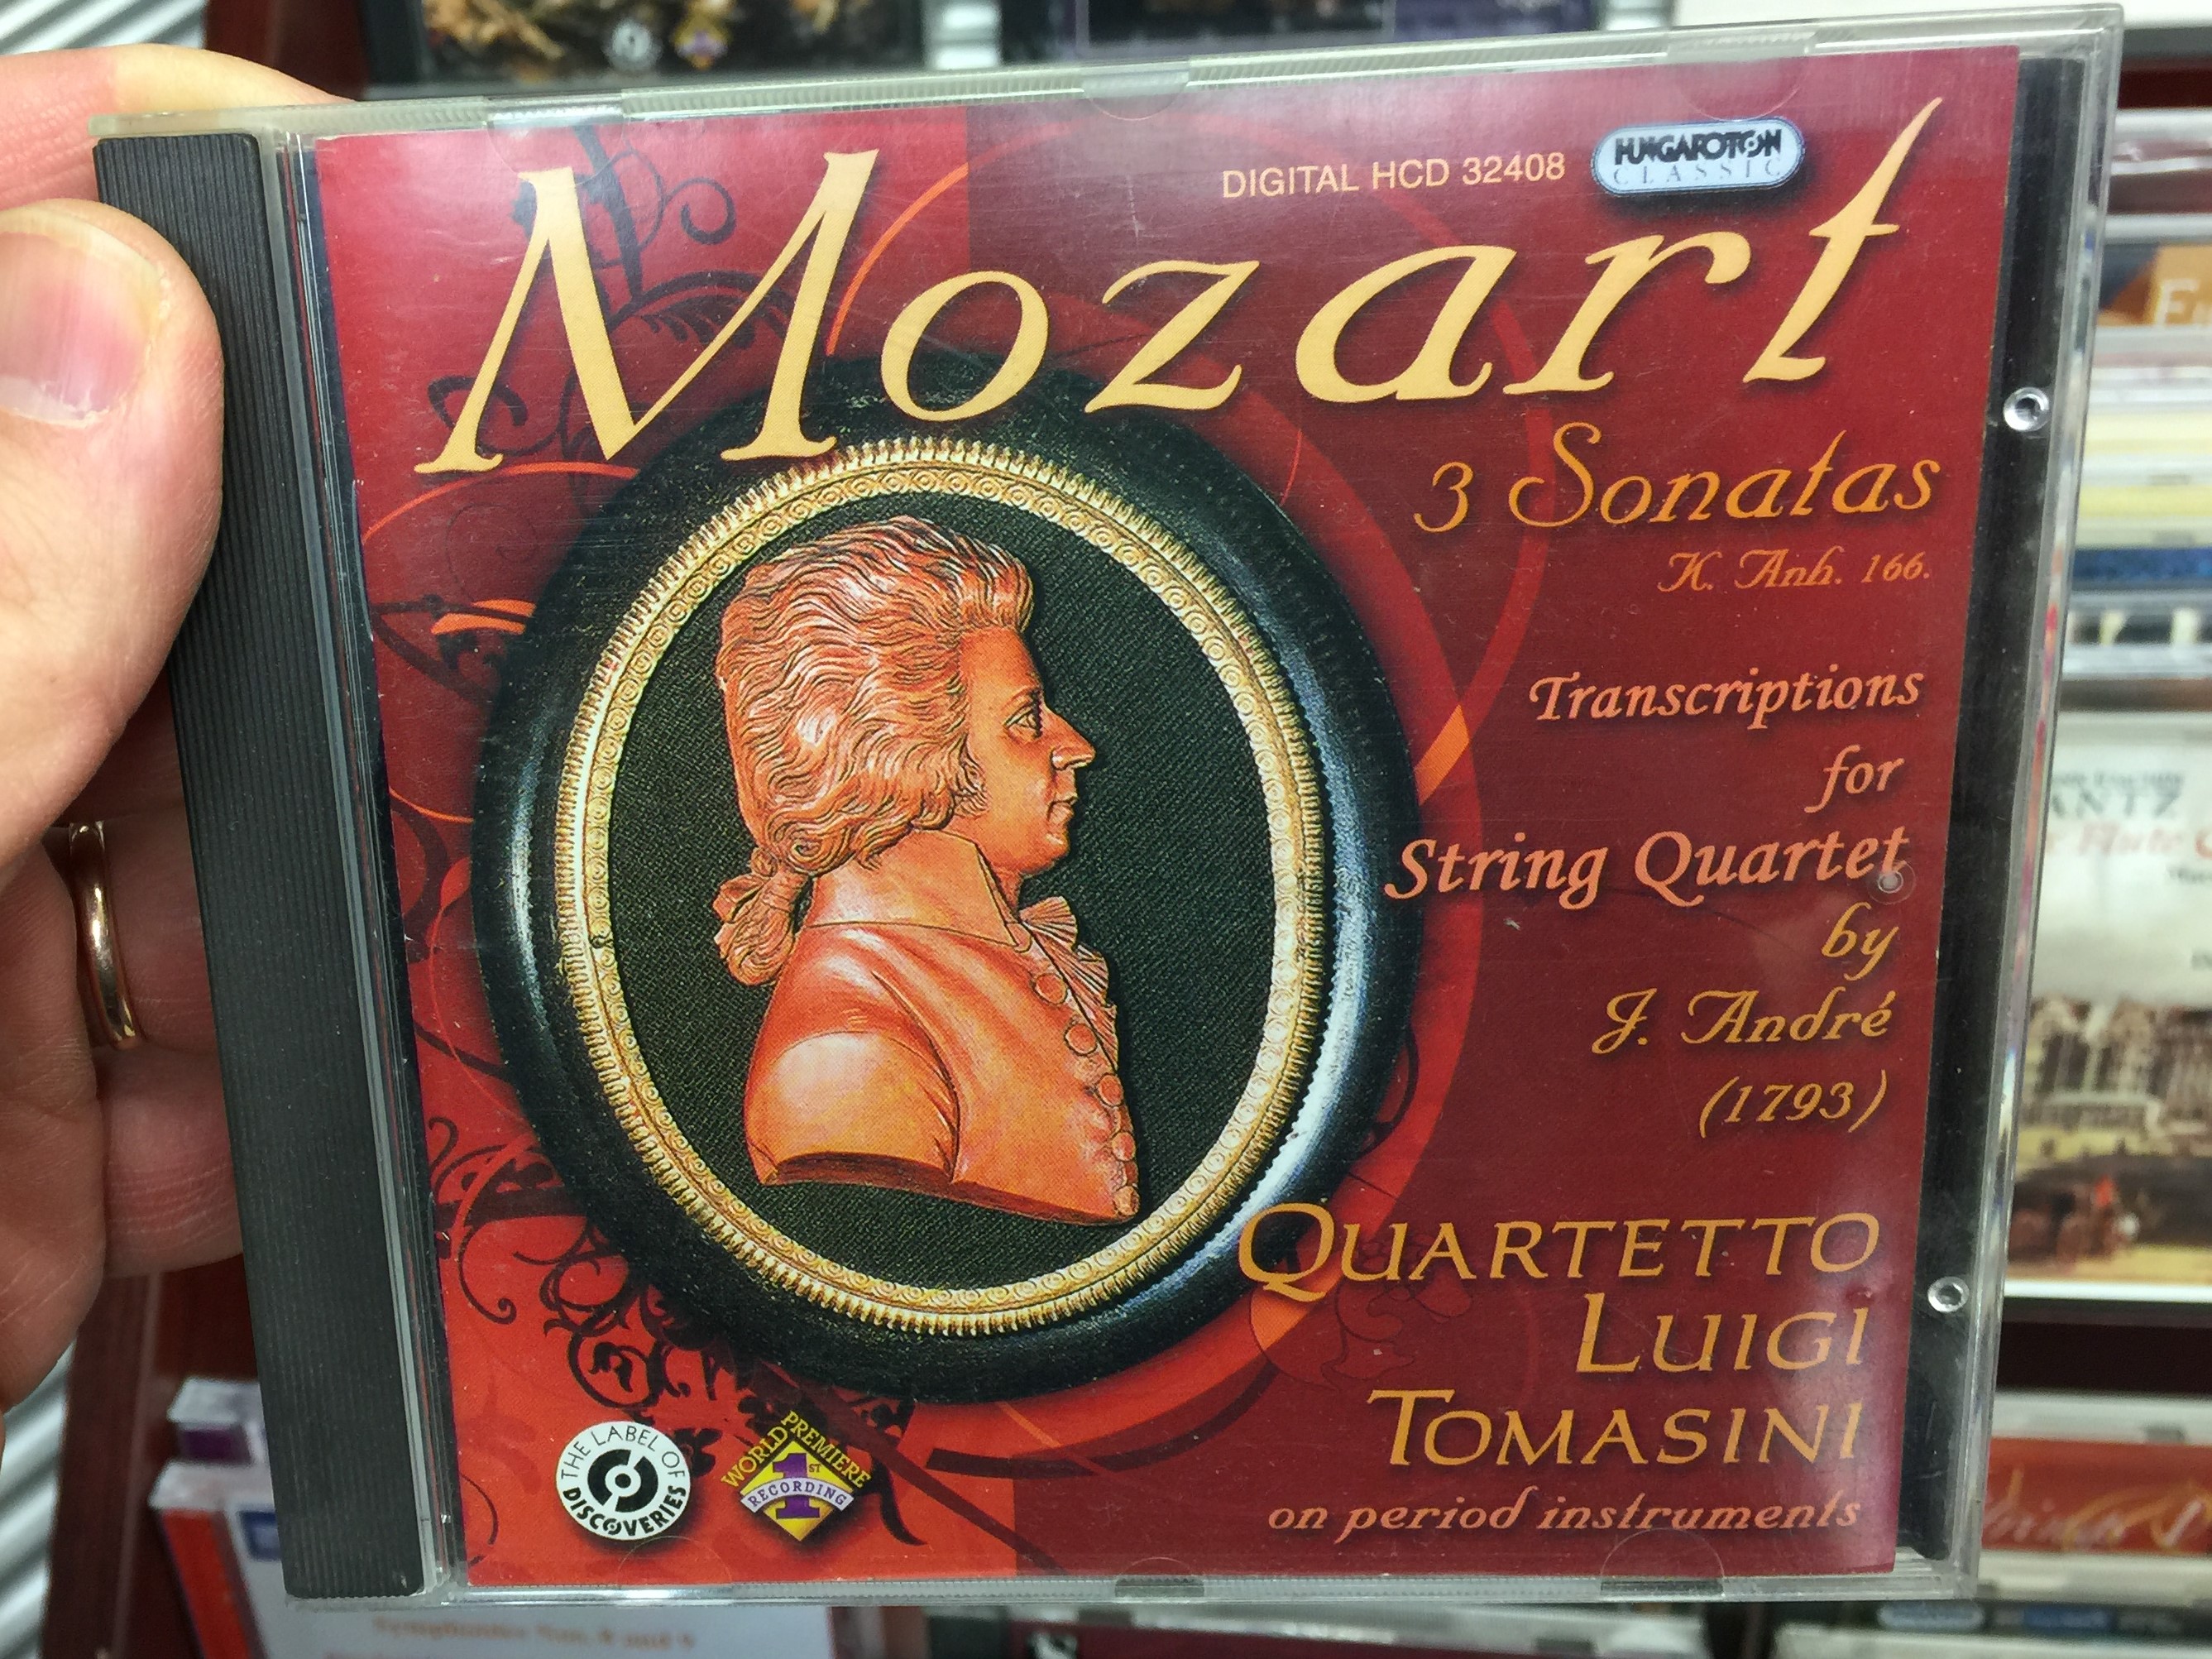 mozart-3-sonatas-k.-anh.-166-transcriptions-for-string-quartet-by-j.-andre-1793-quartetto-luigi-tomasini-on-period-instruments-hungaroton-classic-audio-cd-2008-stereo-hcd-32408.jpg